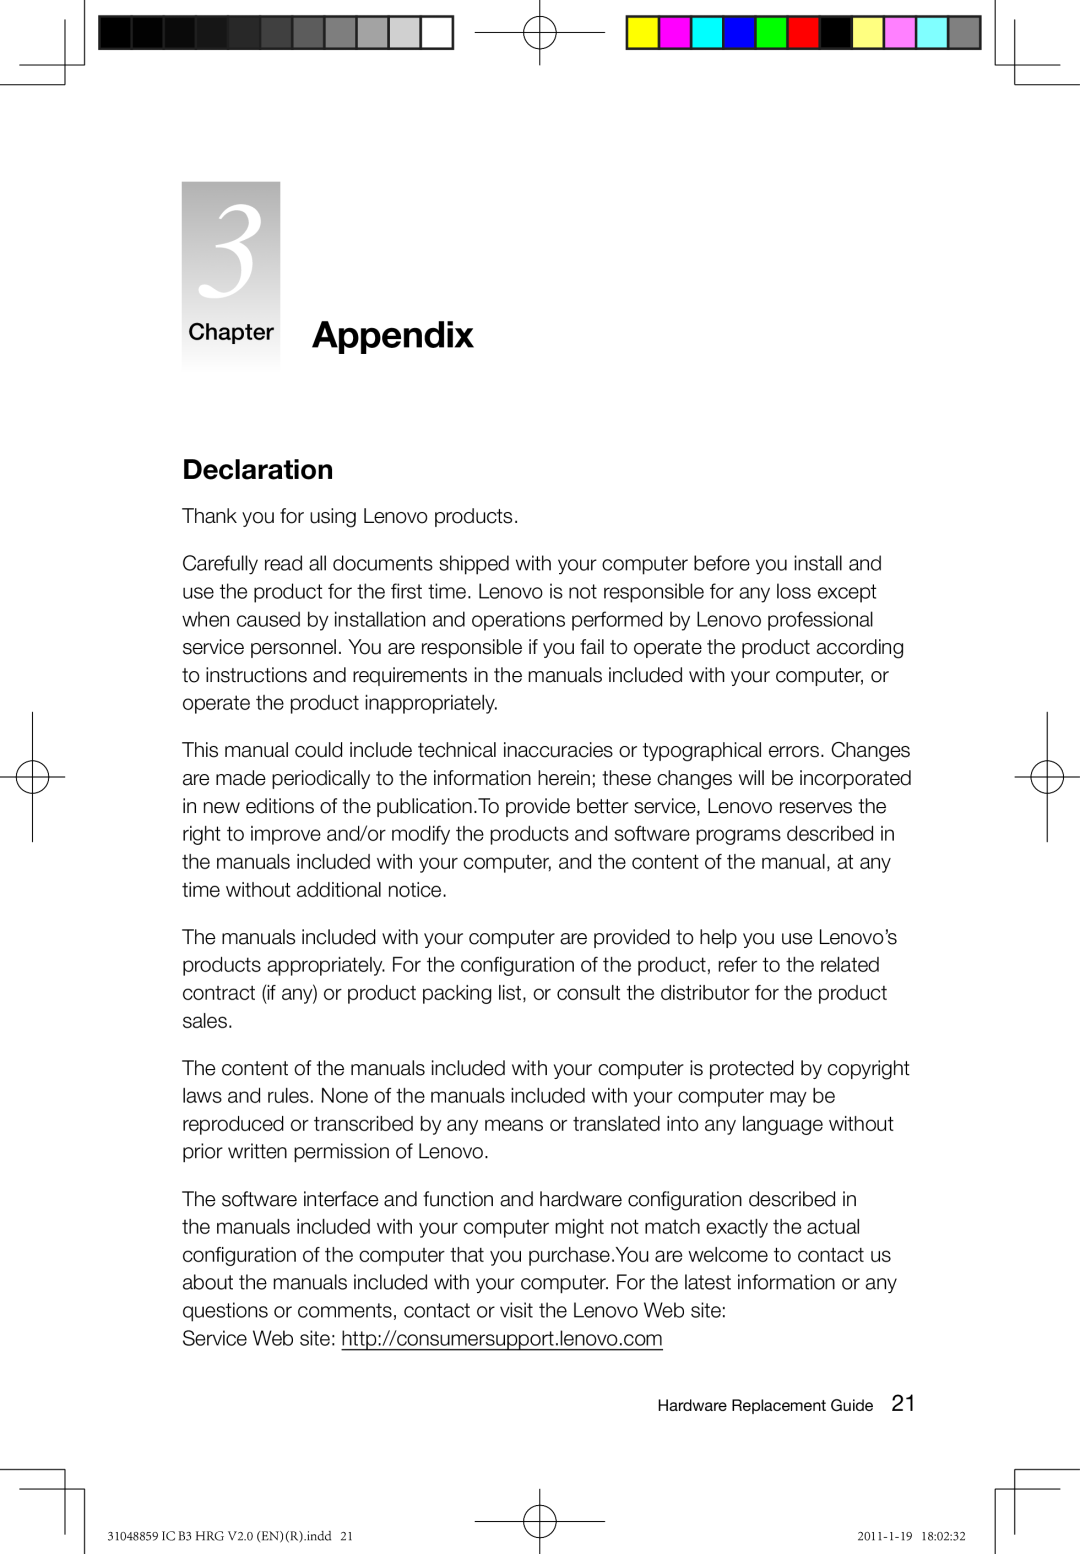 Lenovo B3 manual Declaration, Chapter Appendix 